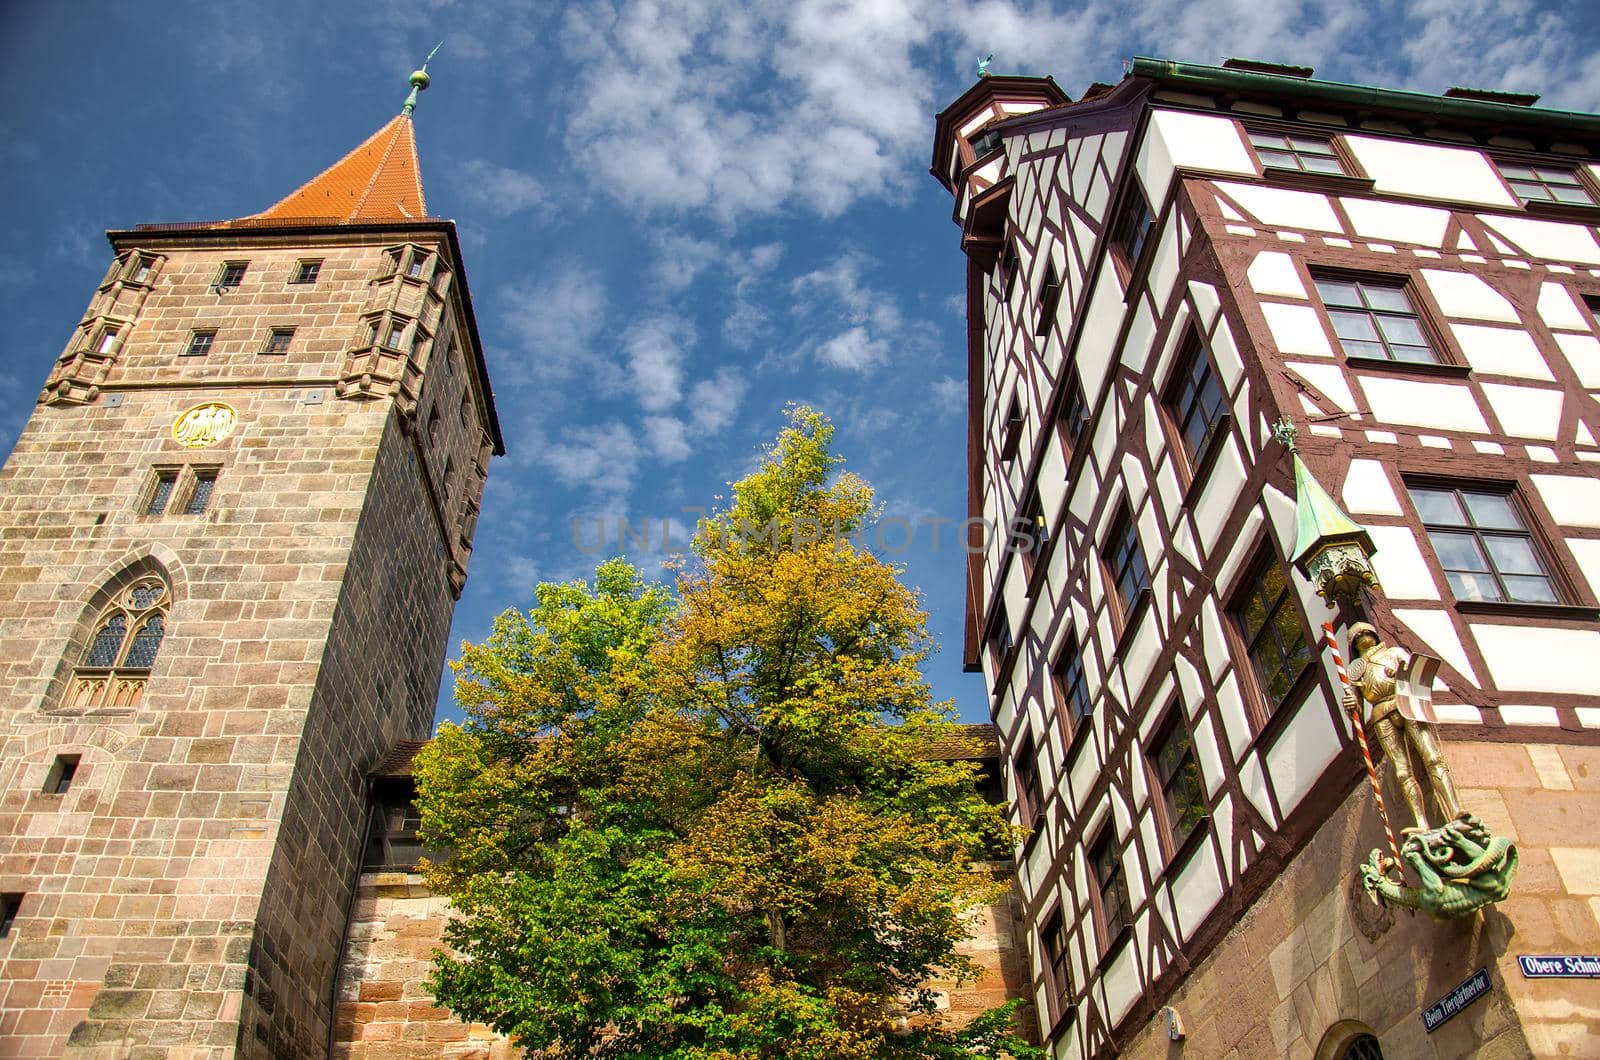 Old medieval Tower Tiergartnertorturm and traditional buildings on the streets of Nuremberg Nurnberg city, Mittelfranken region, Bavaria, Germany